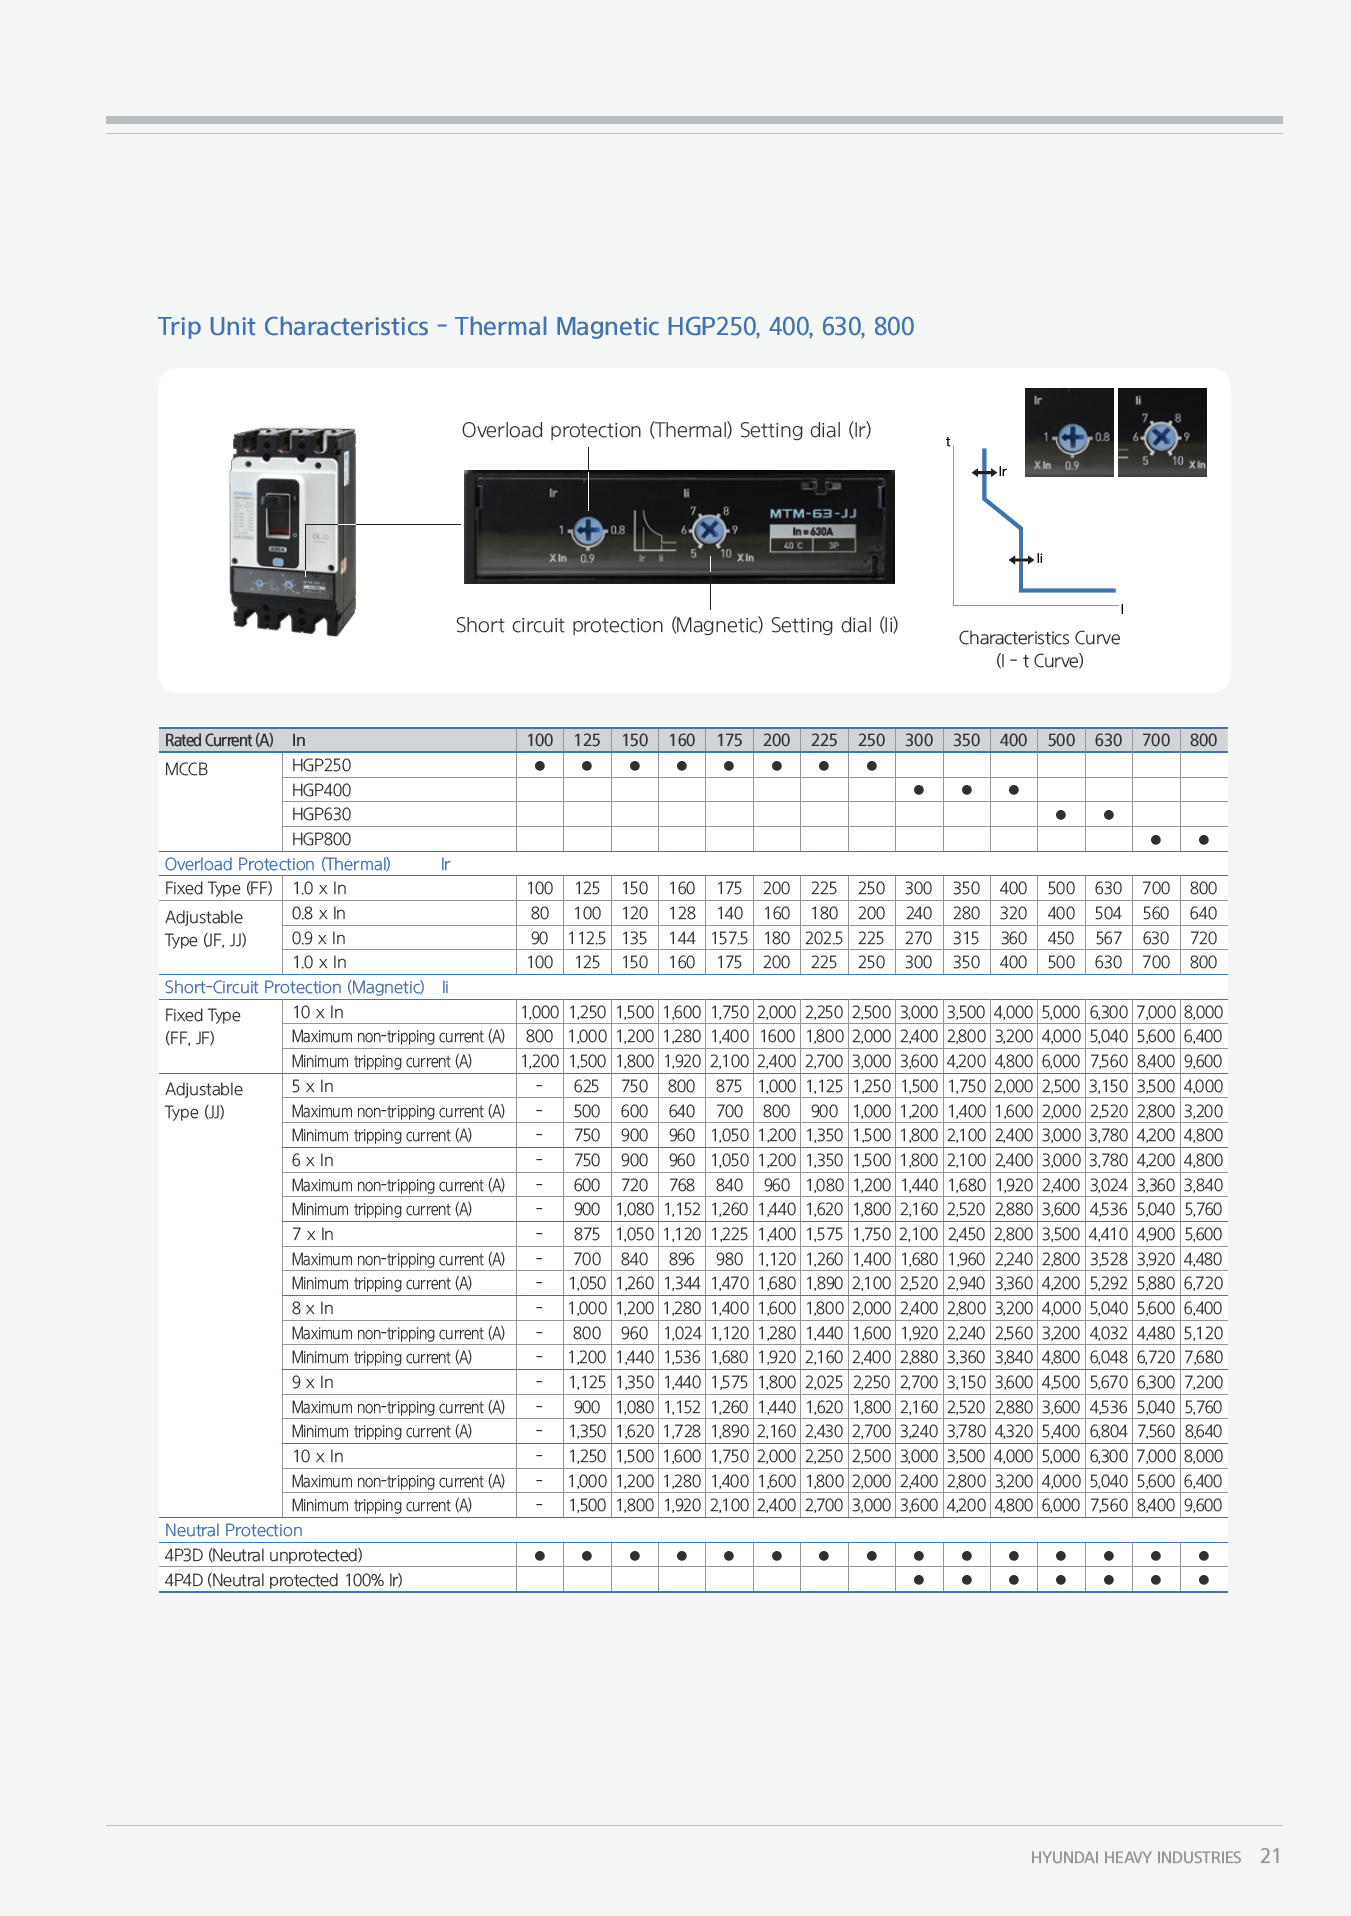 Hyundai Marine Circuit Breaker (MCCB) - HGP250F 3P Fixed / Plug-in Type